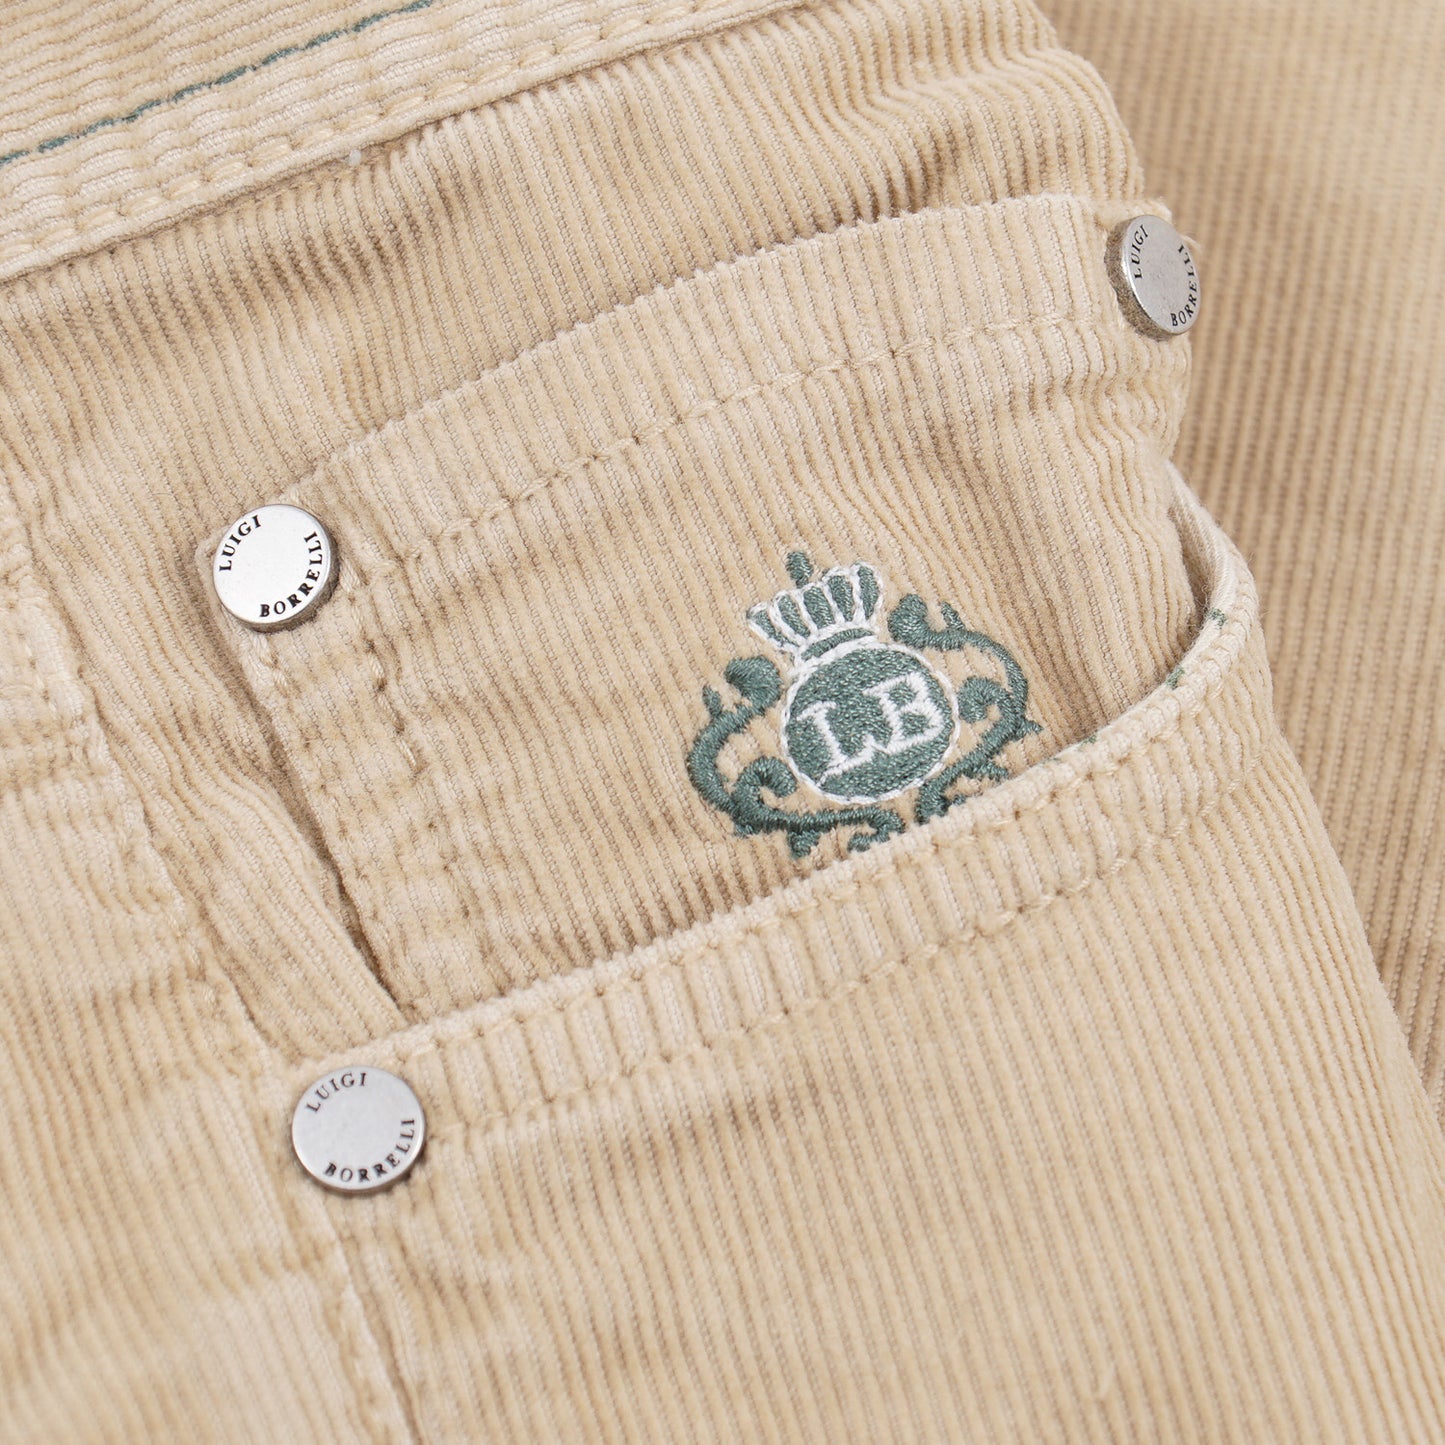 Luigi Borrelli Corduroy 5-Pocket Pants - Top Shelf Apparel